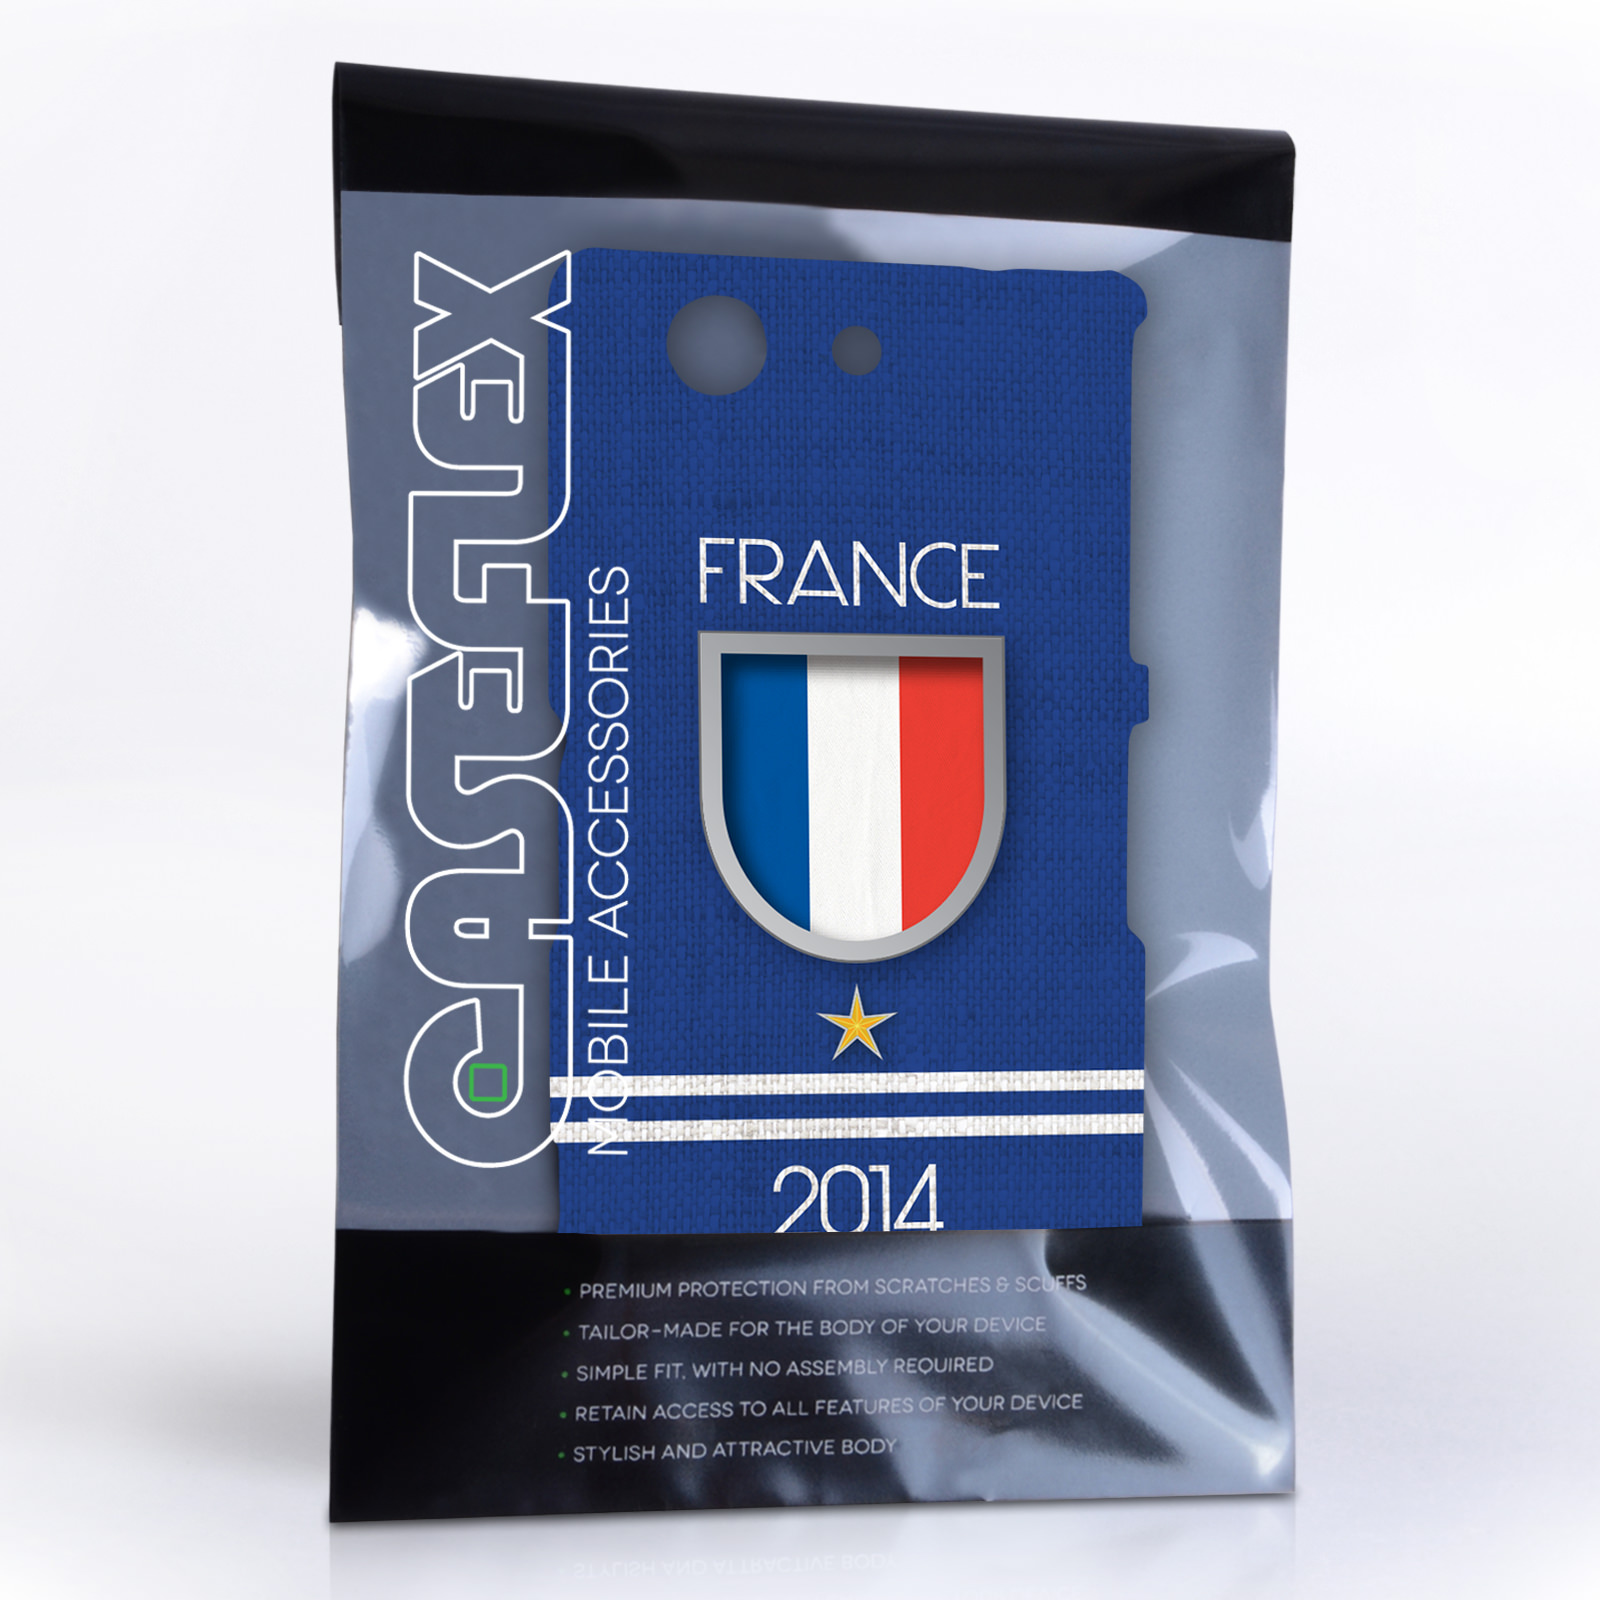 Caseflex Sony Xperia Z3 Compact France World Cup Case